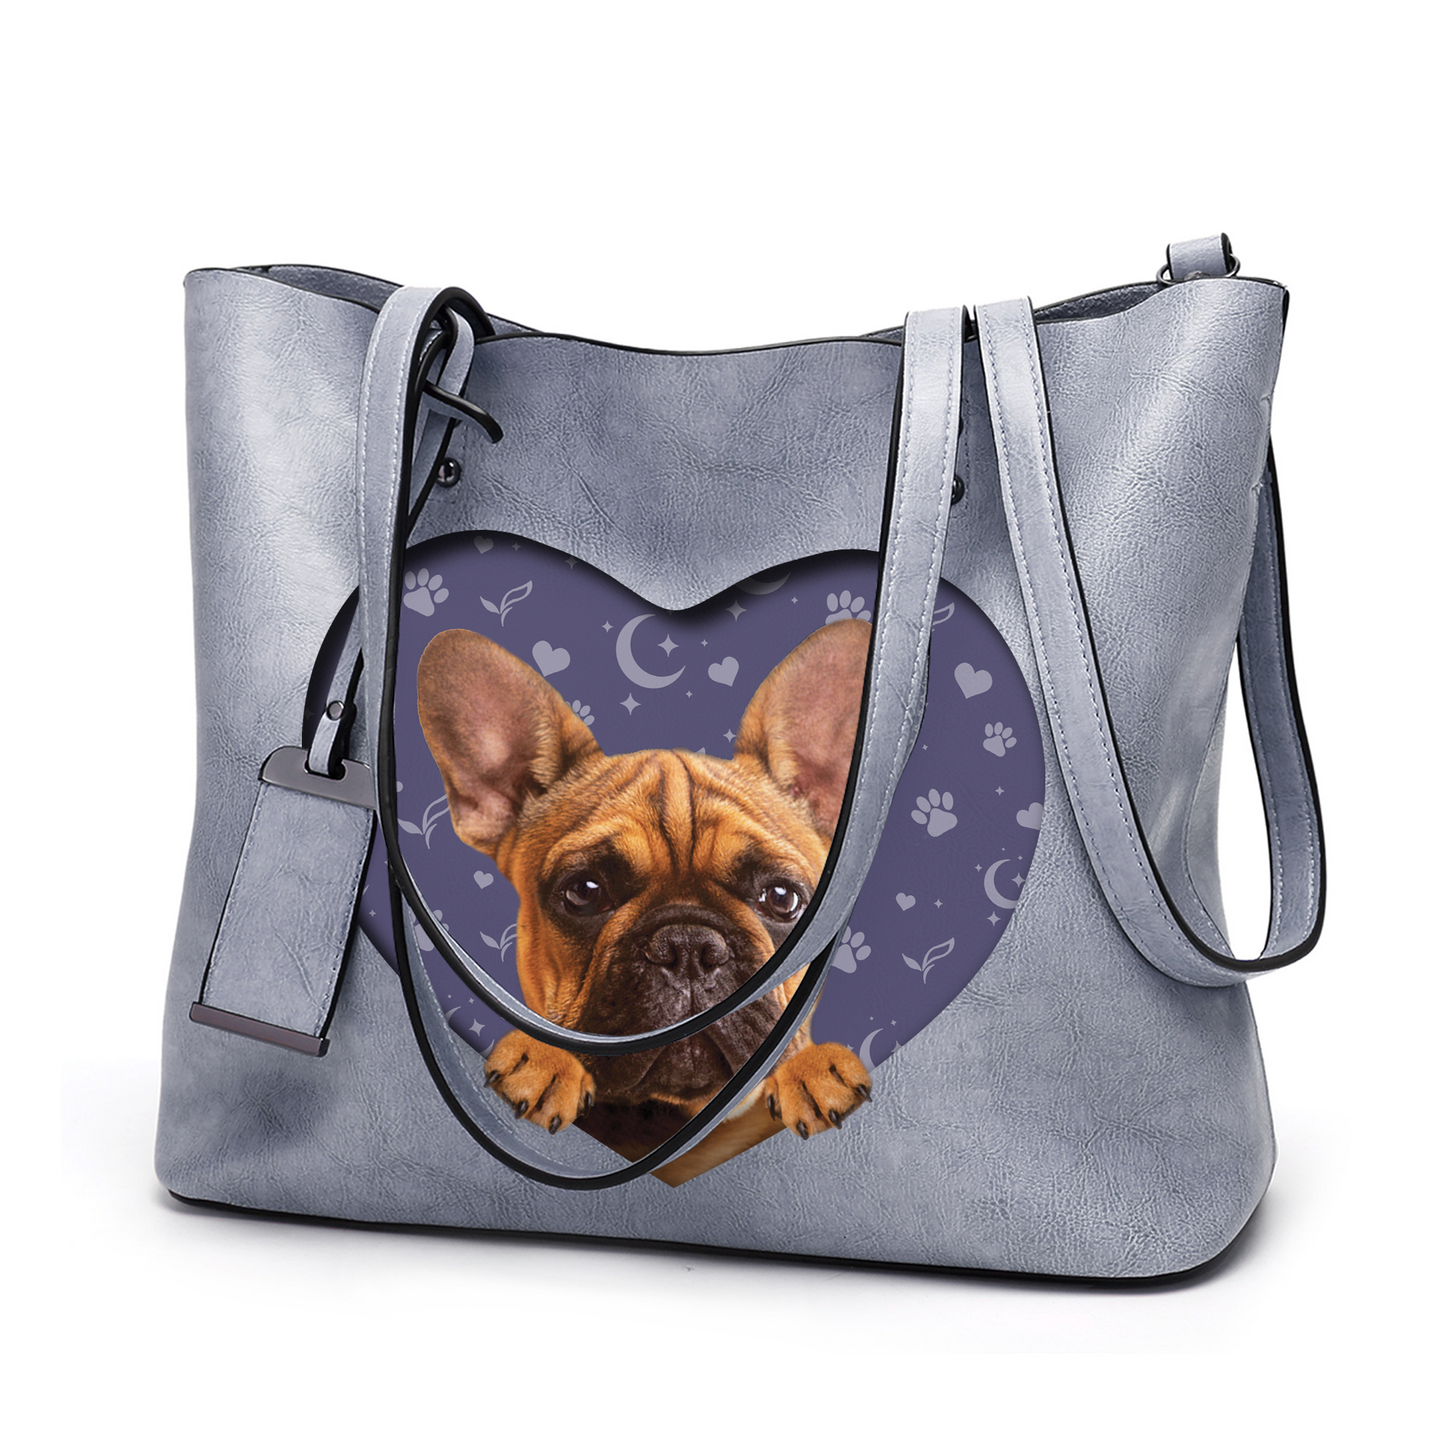 I Know I'm Cute - French Bulldog Glamour Handbag V1 - 9